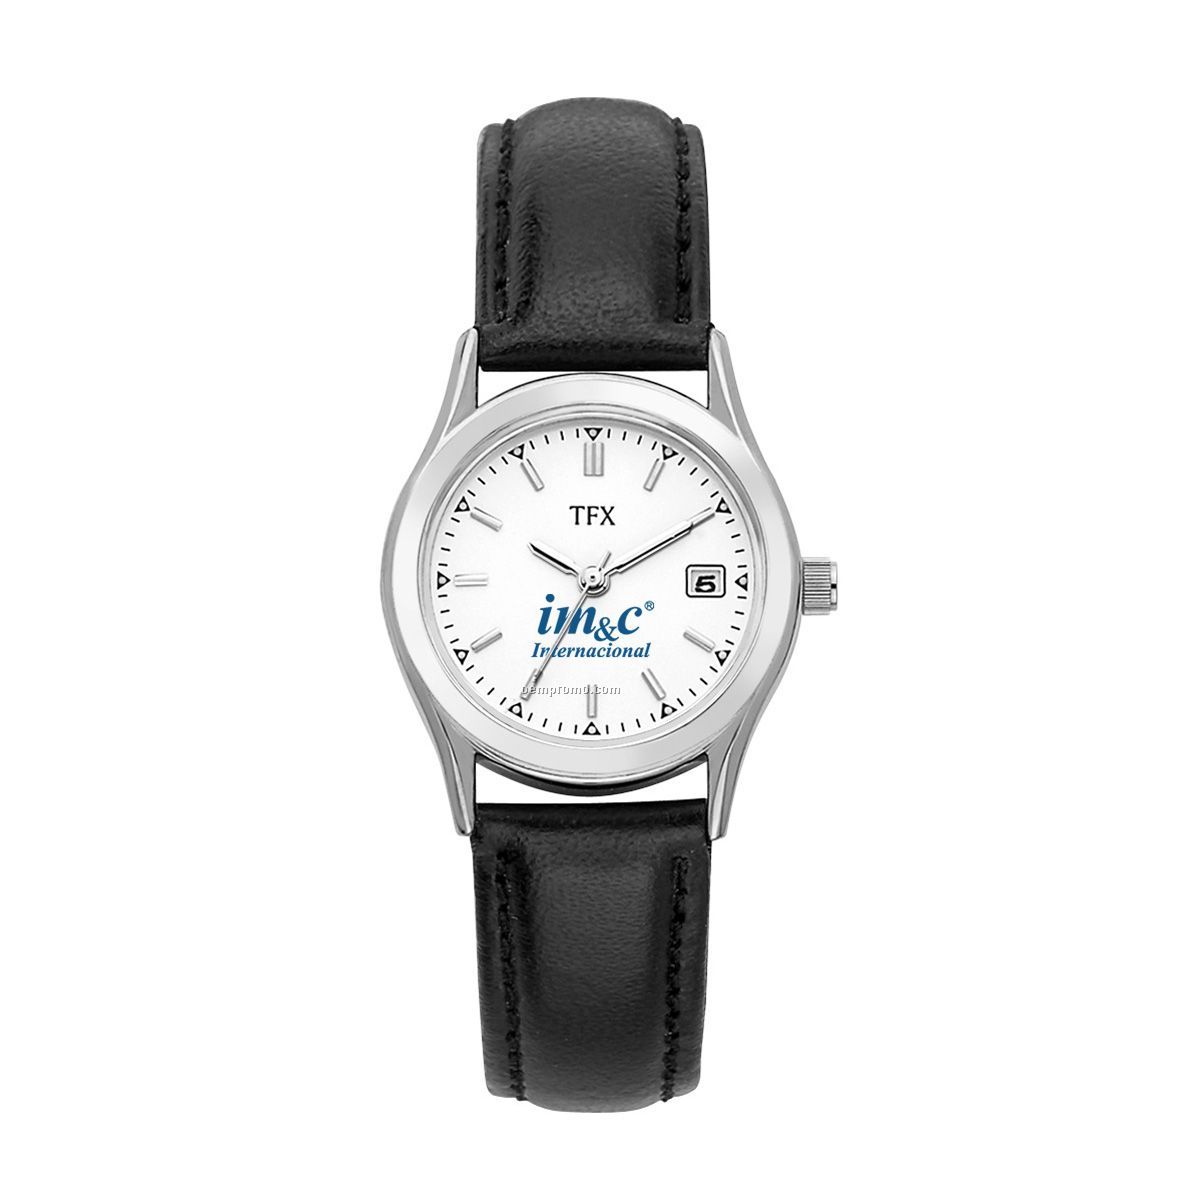 Tfx Distributed By Bulova- Ladies' Analog Wrist Watch